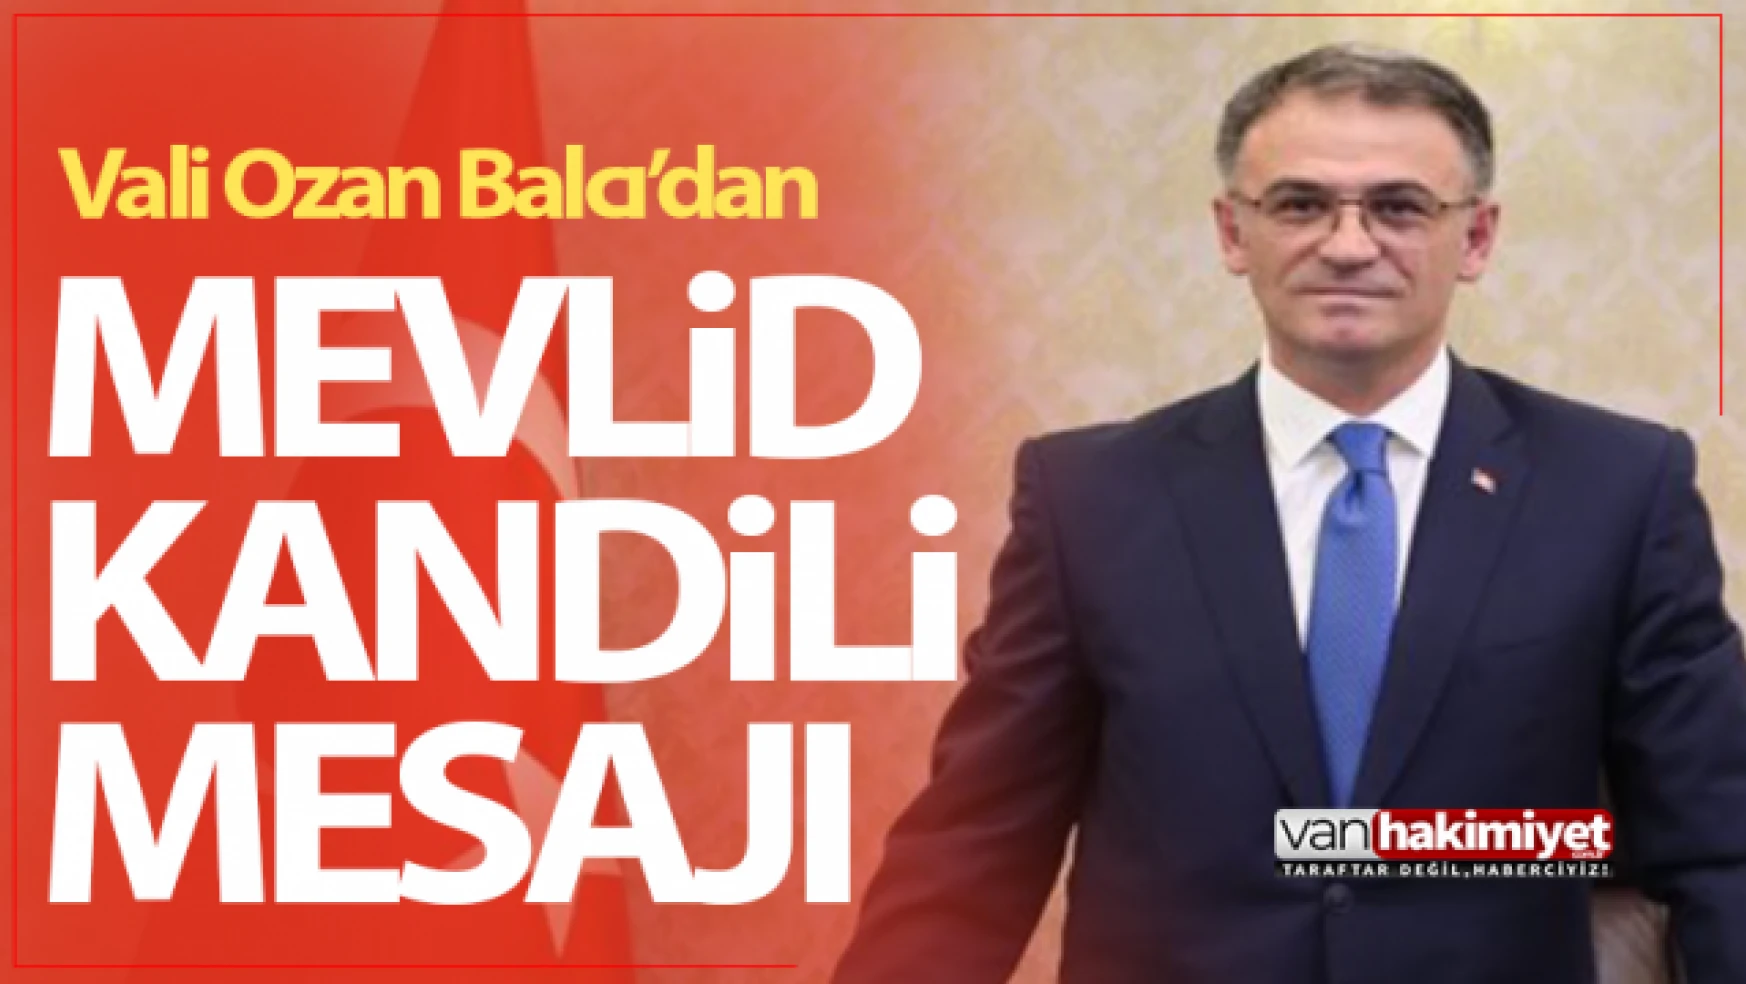 Vali Ozan Balcı'nın Mevlid Kandili Mesajı